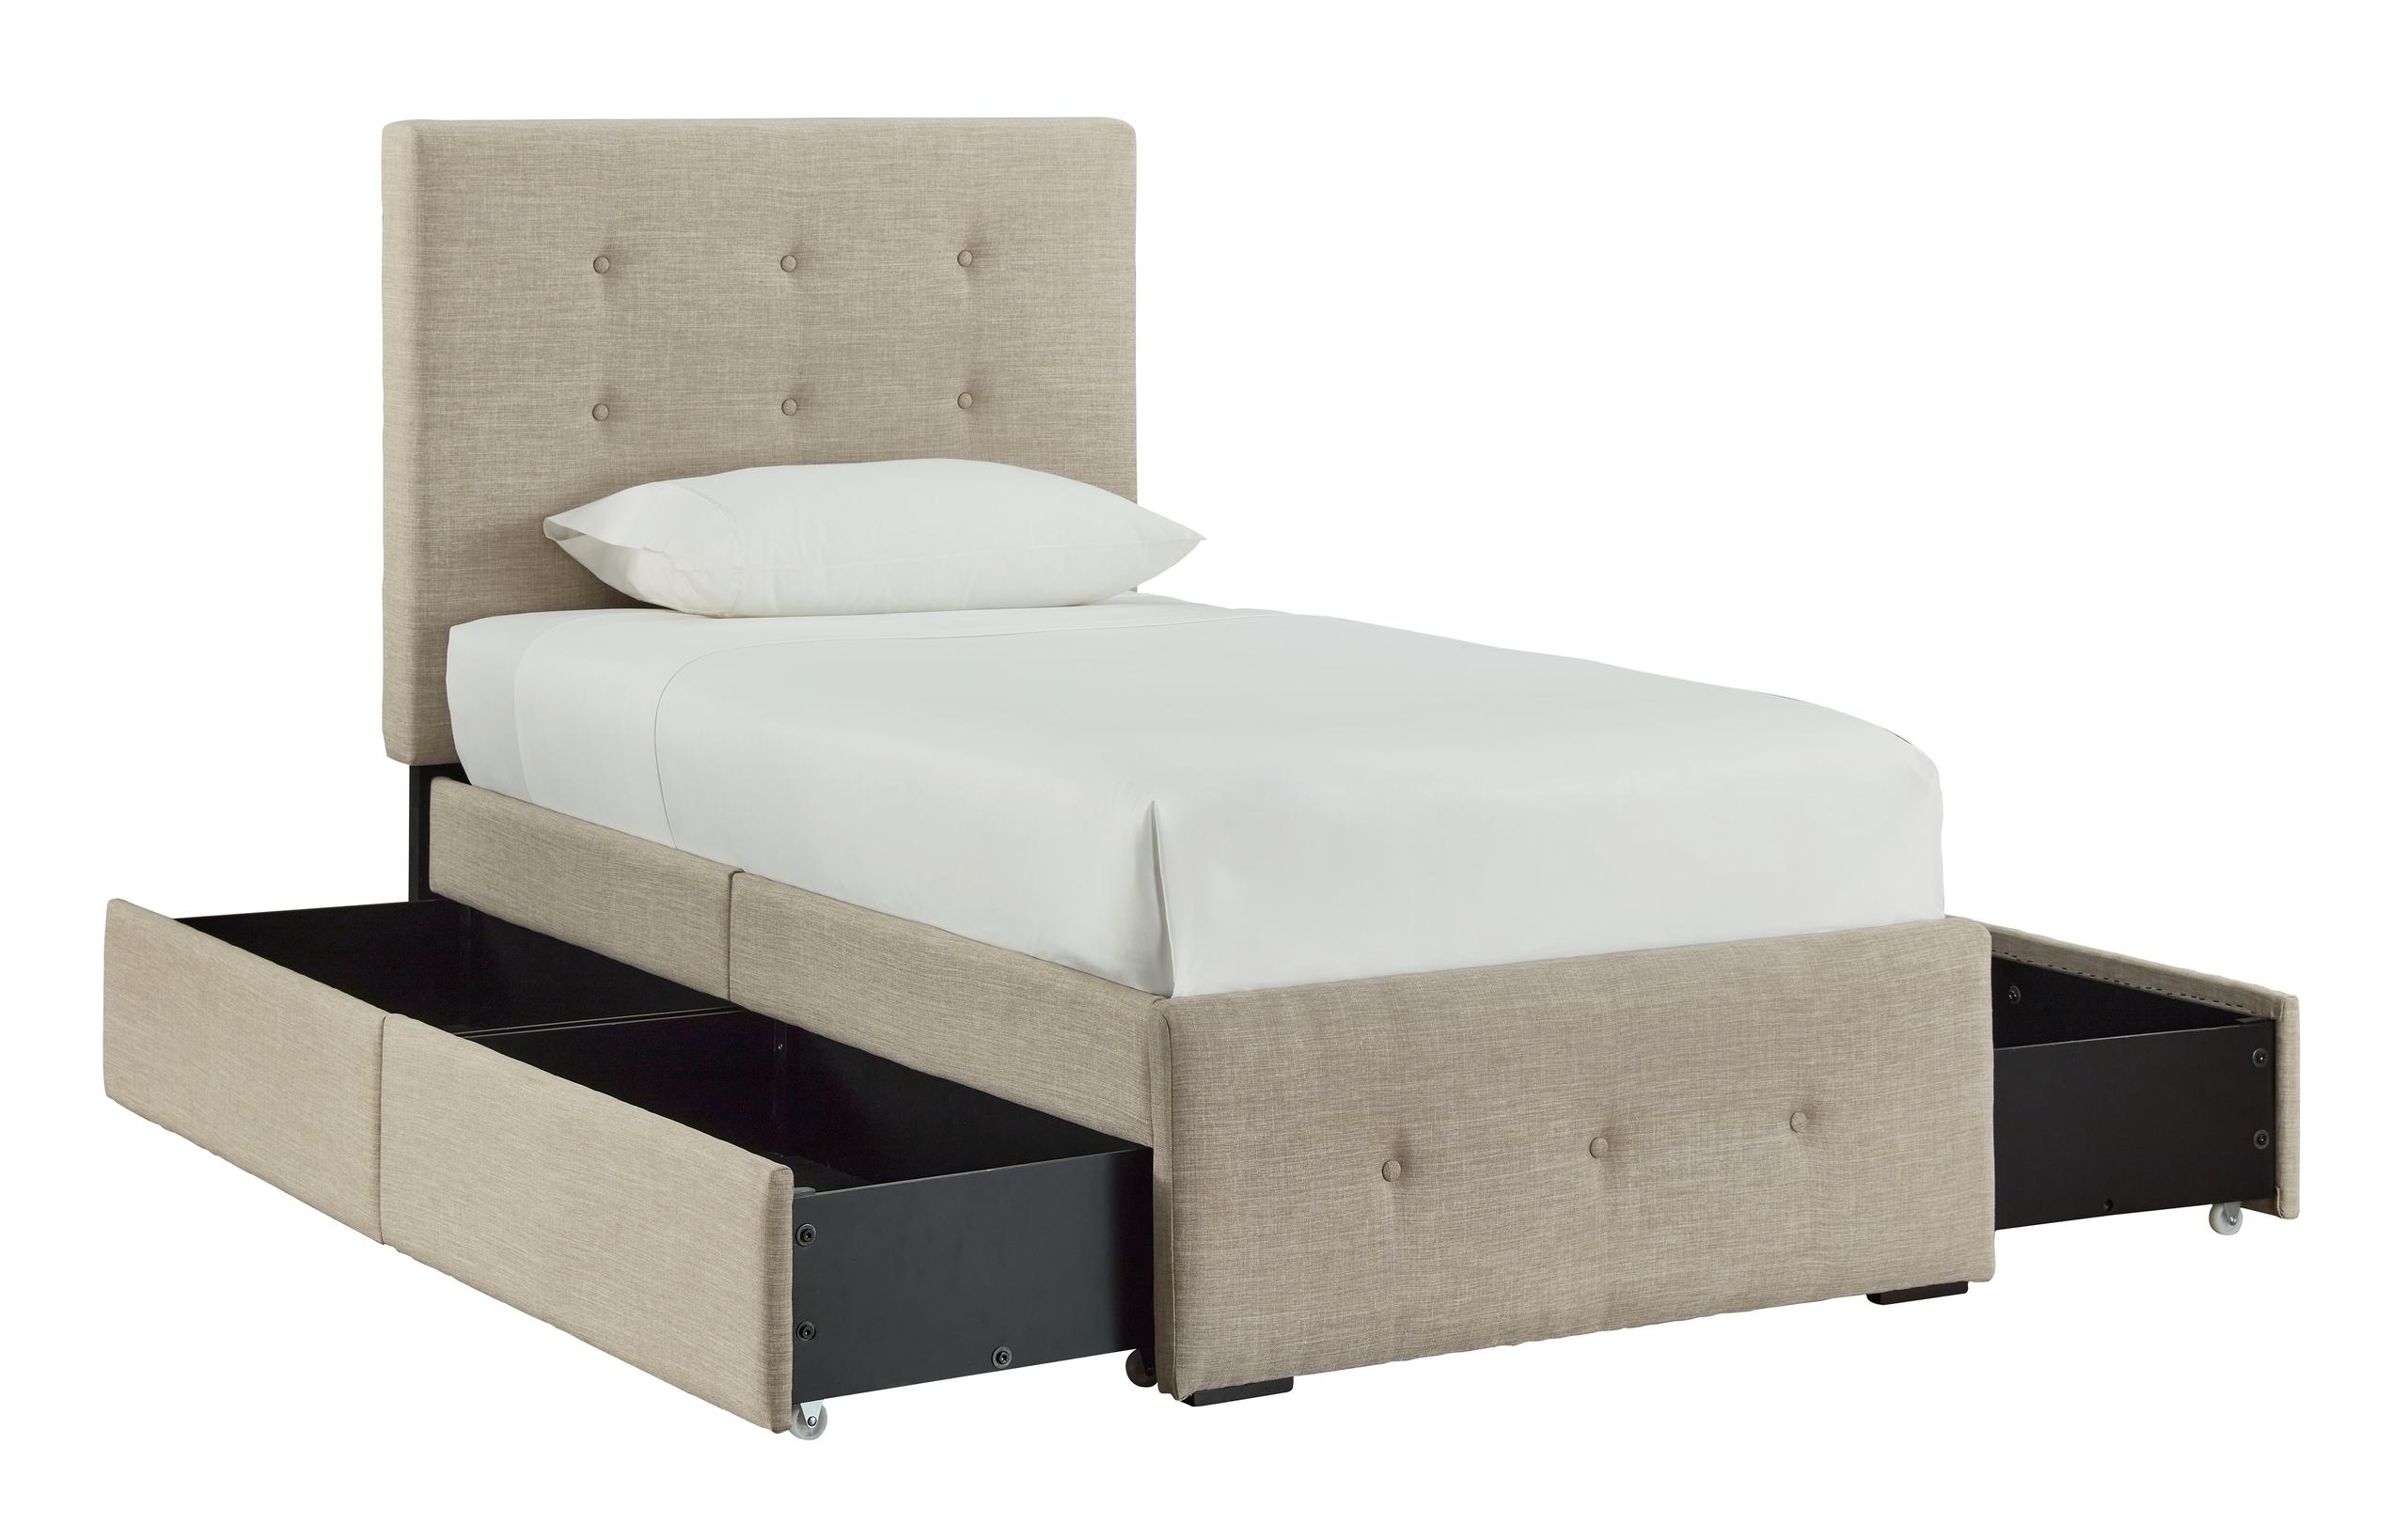 ASHLEY FURNITURE B092B2 Gladdinson Twin Upholstered Storage Bed